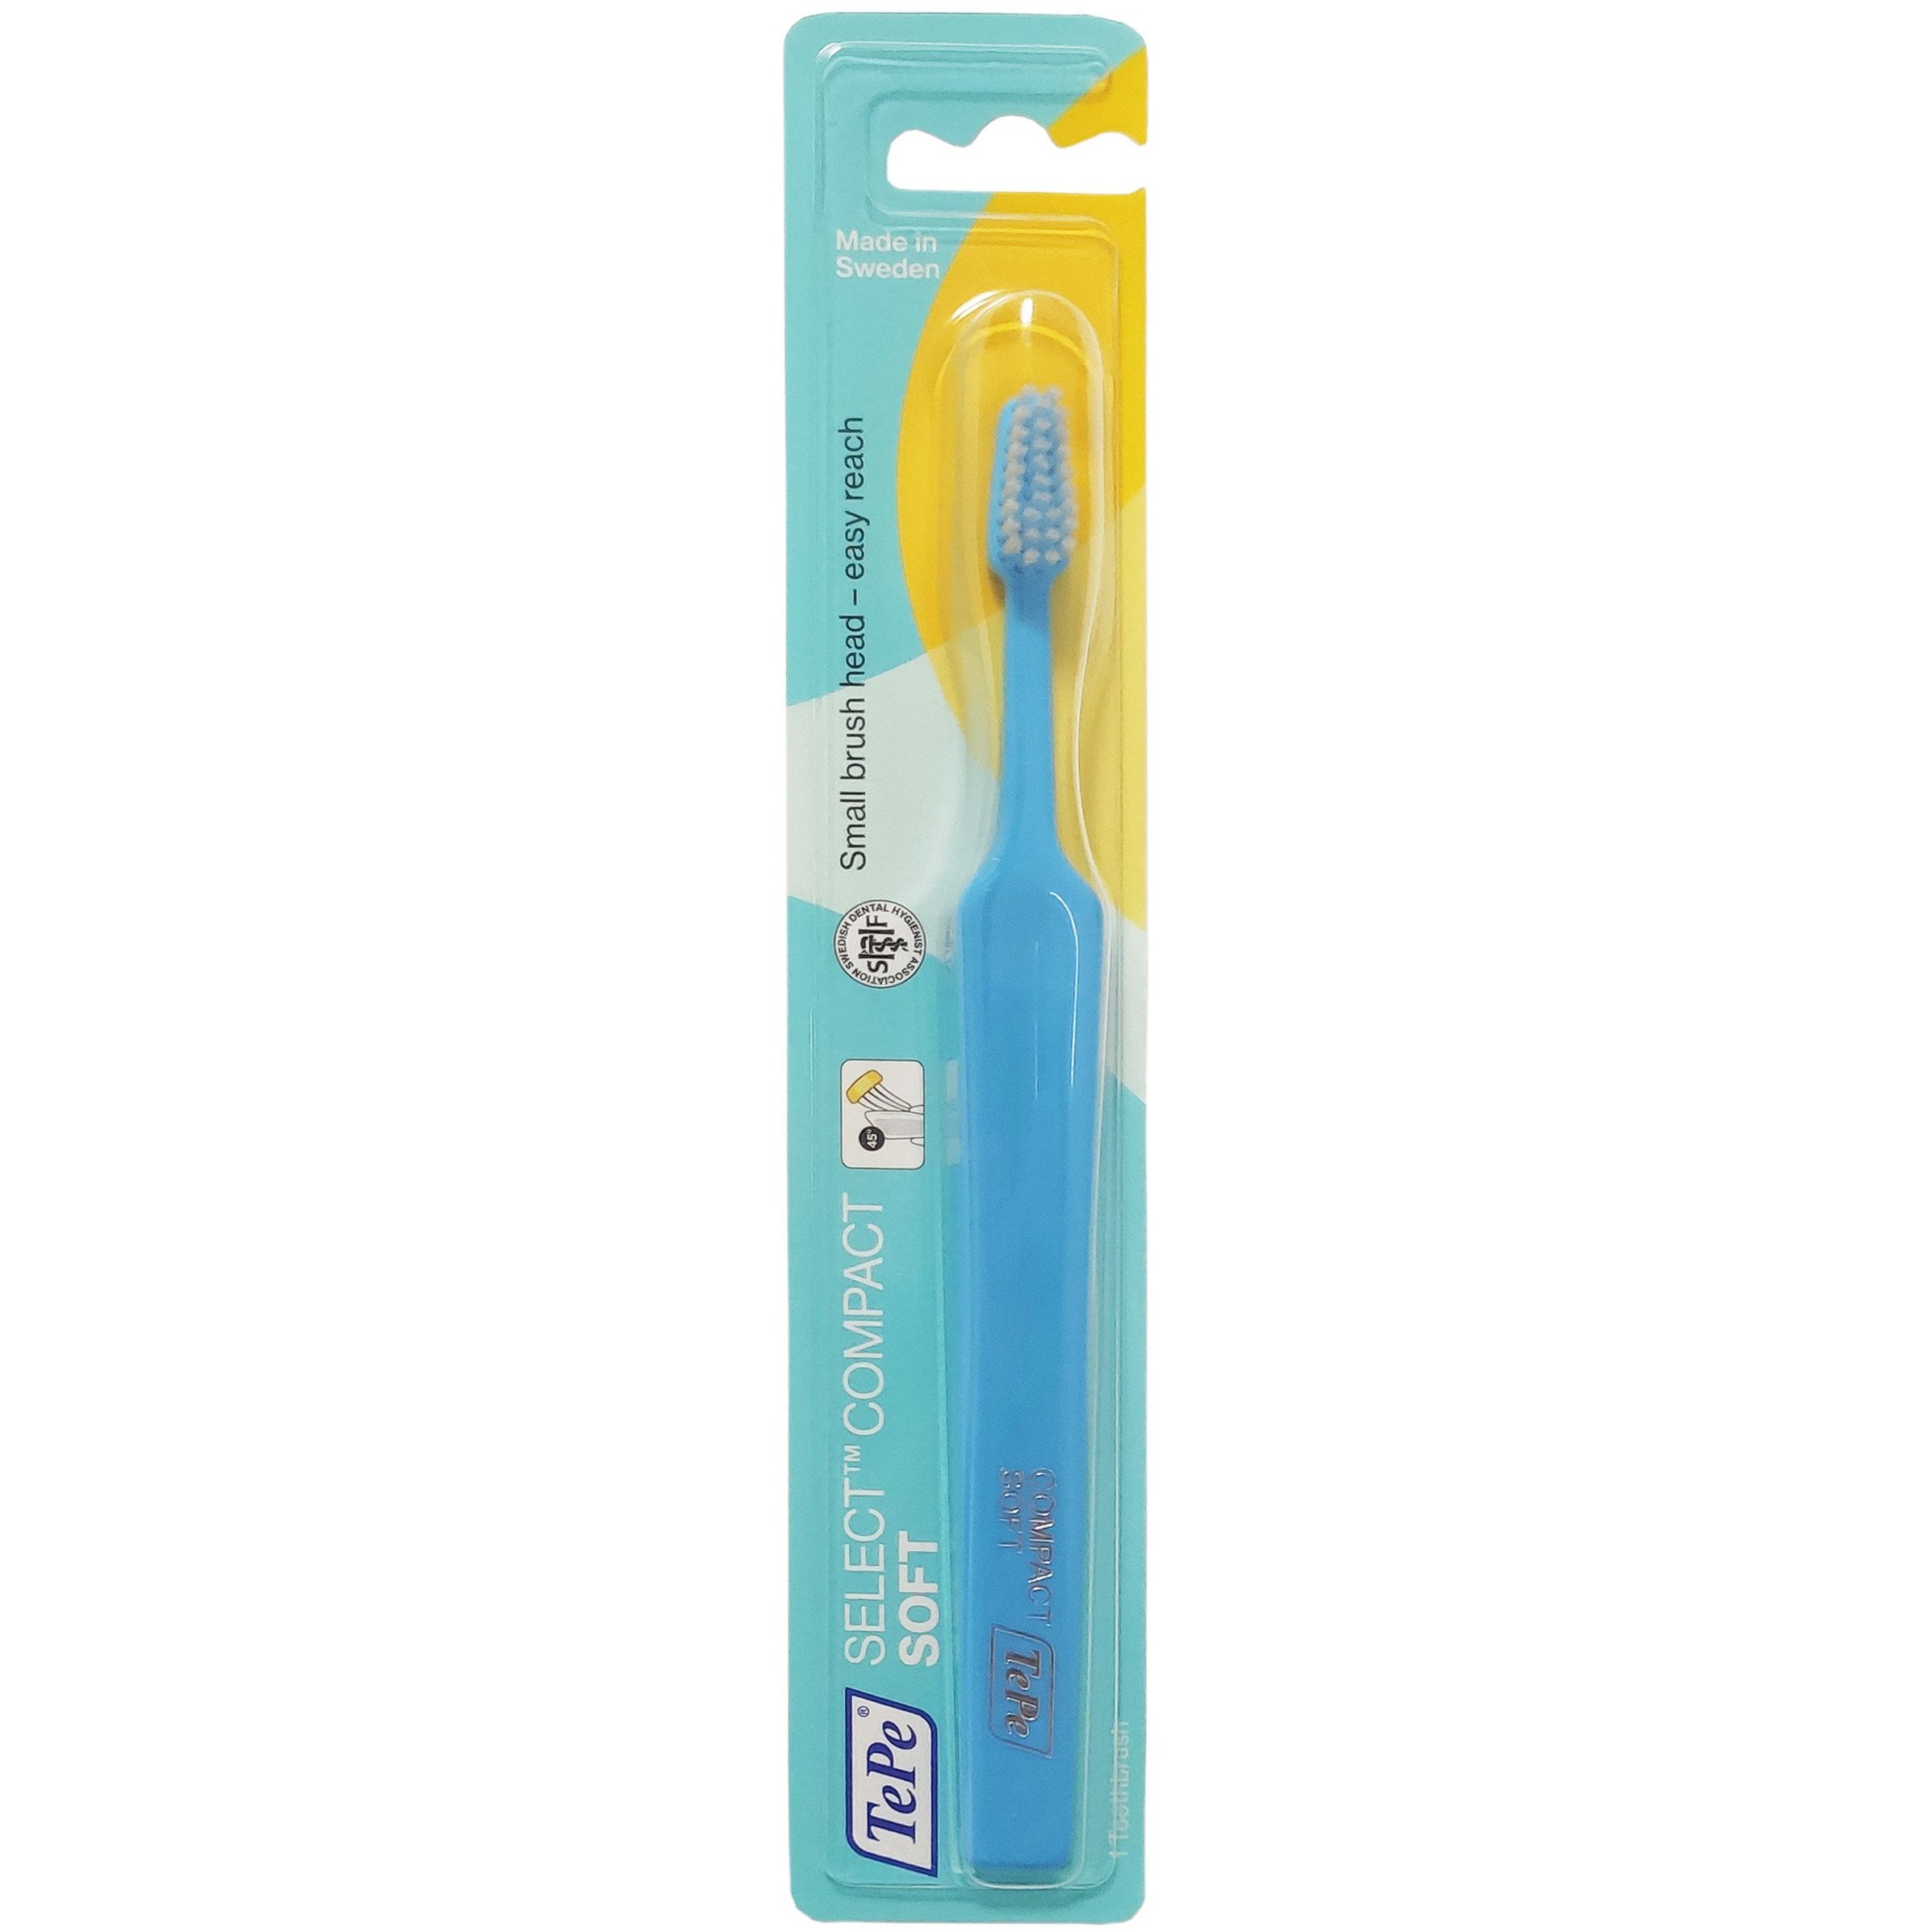 TePe Select Compact Soft Toothbrush Μαλακή Οδοντόβουρτσα με Μικρή Κεφαλή για Αποτελεσματικό Καθαρισμό 1 Τεμάχιο – Γαλάζιο